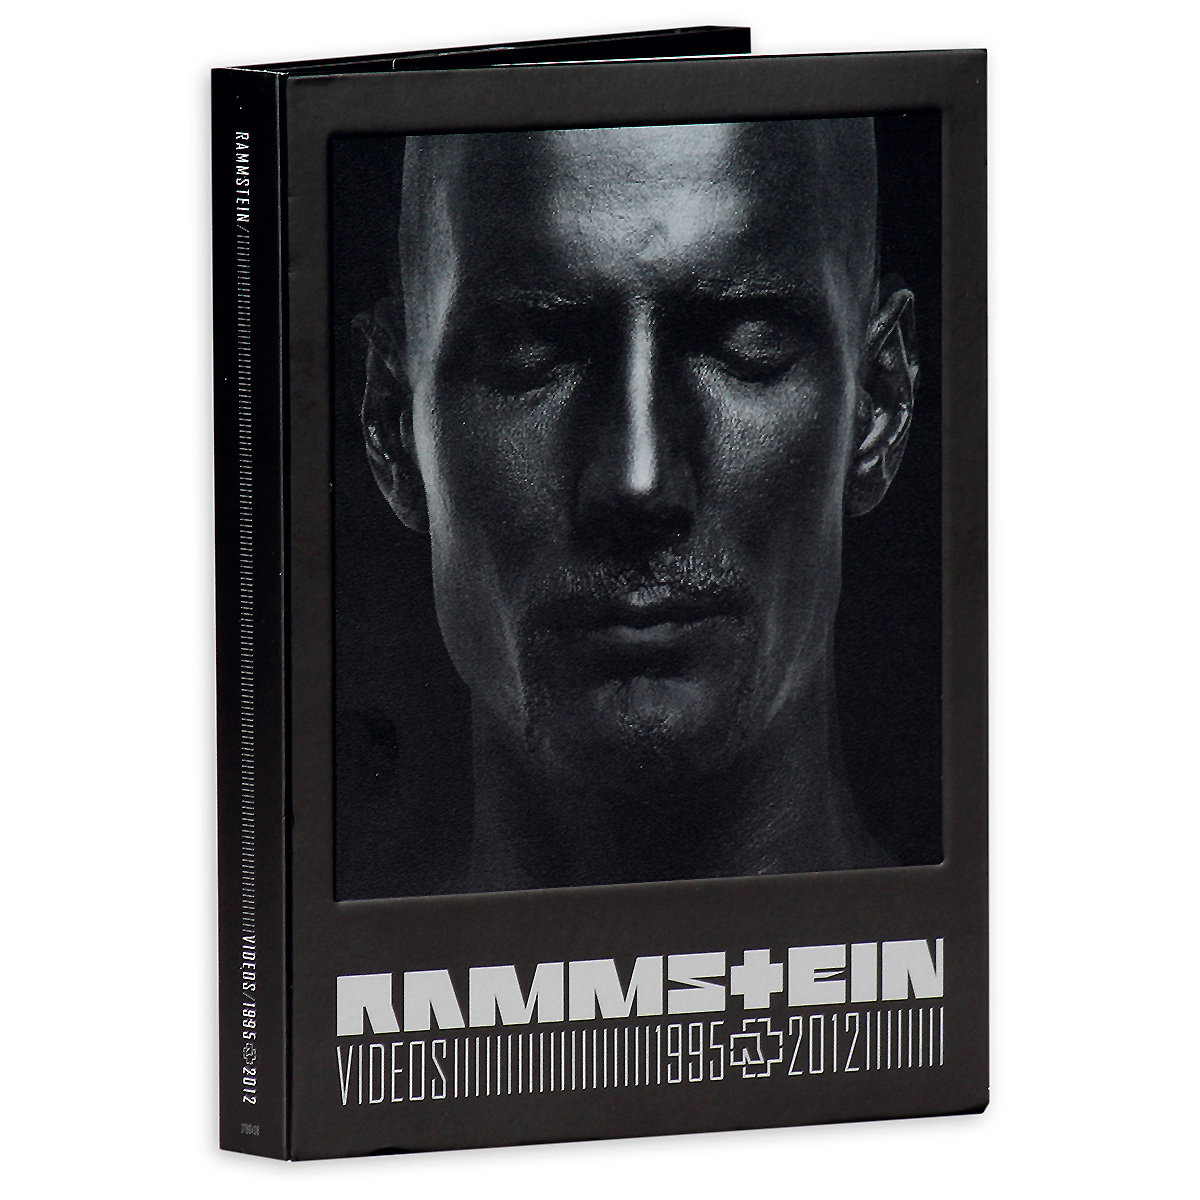 Rammstein - Videos 1995-2012 (3 DVD)